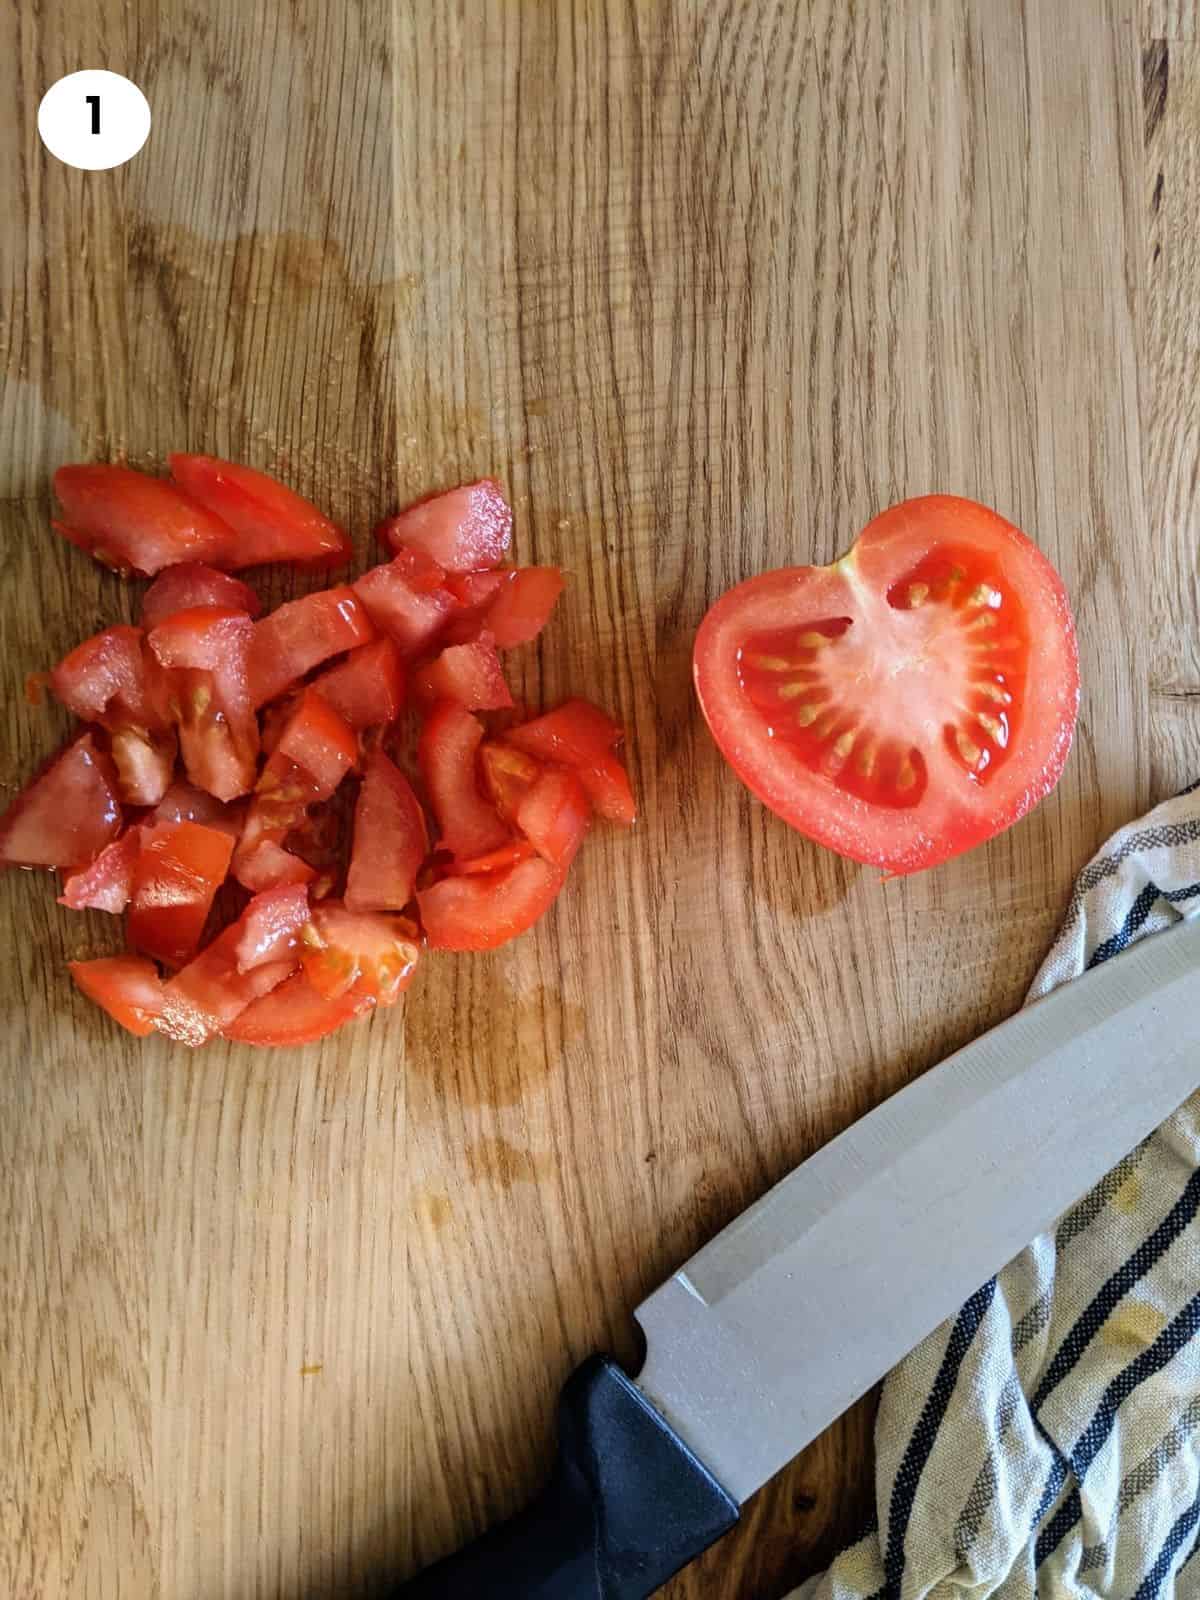 Chopping tomato for spanakorizo.